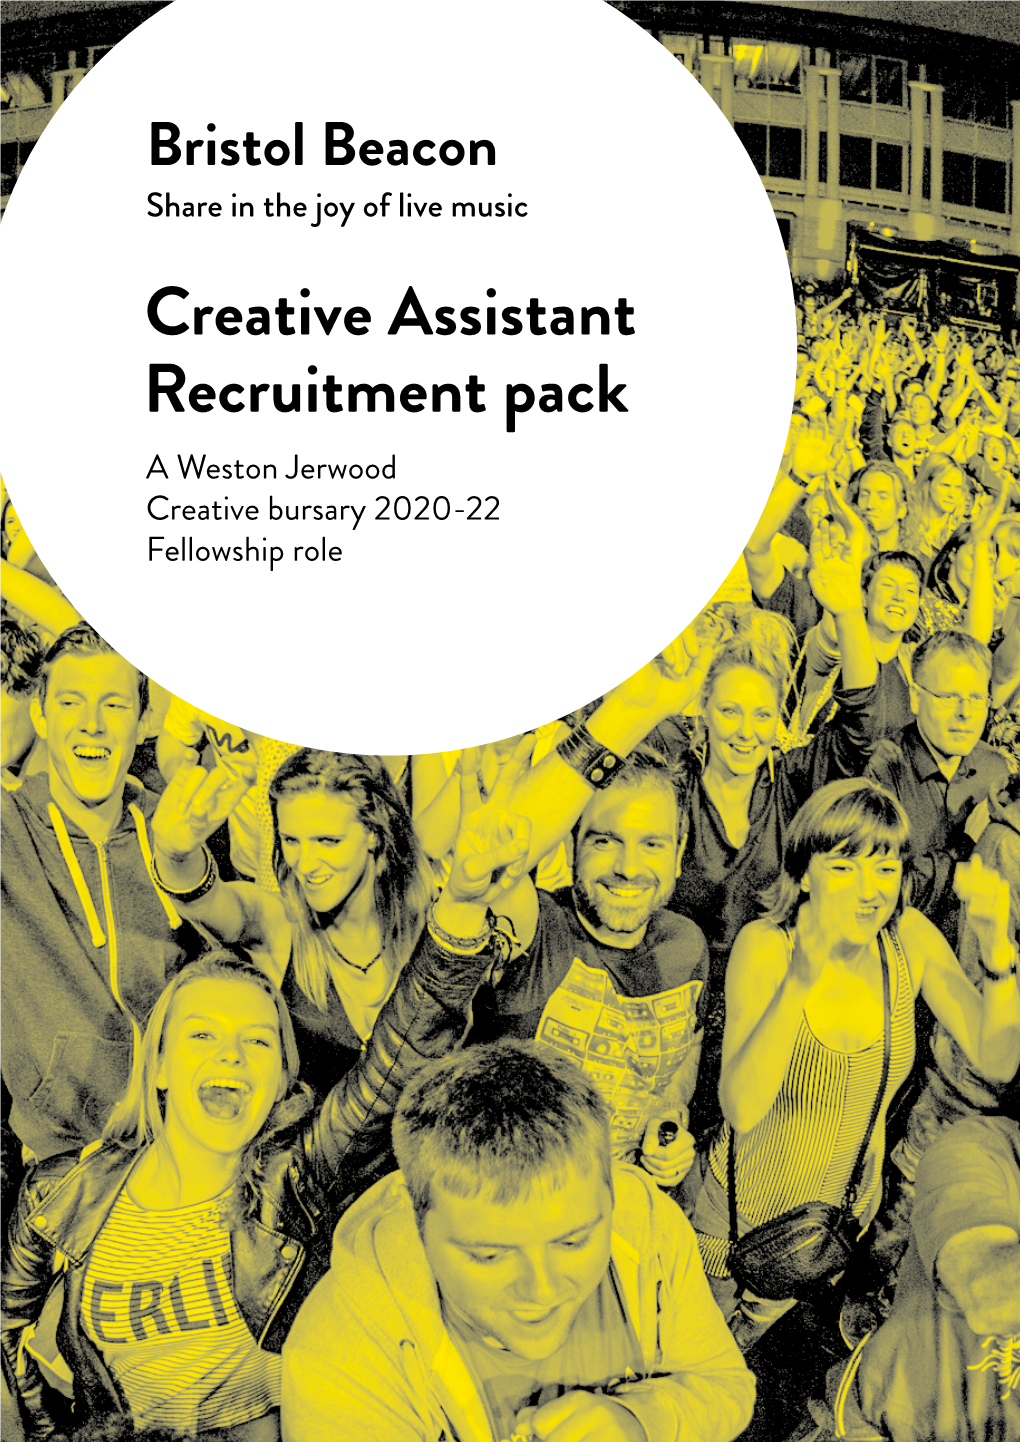 Creative Assistant Recruitment Pack a Weston Jerwood Creative Bursary 2020-22 Fellowship Role Recruitment Pack — Creative Assistant Bristol Beacon